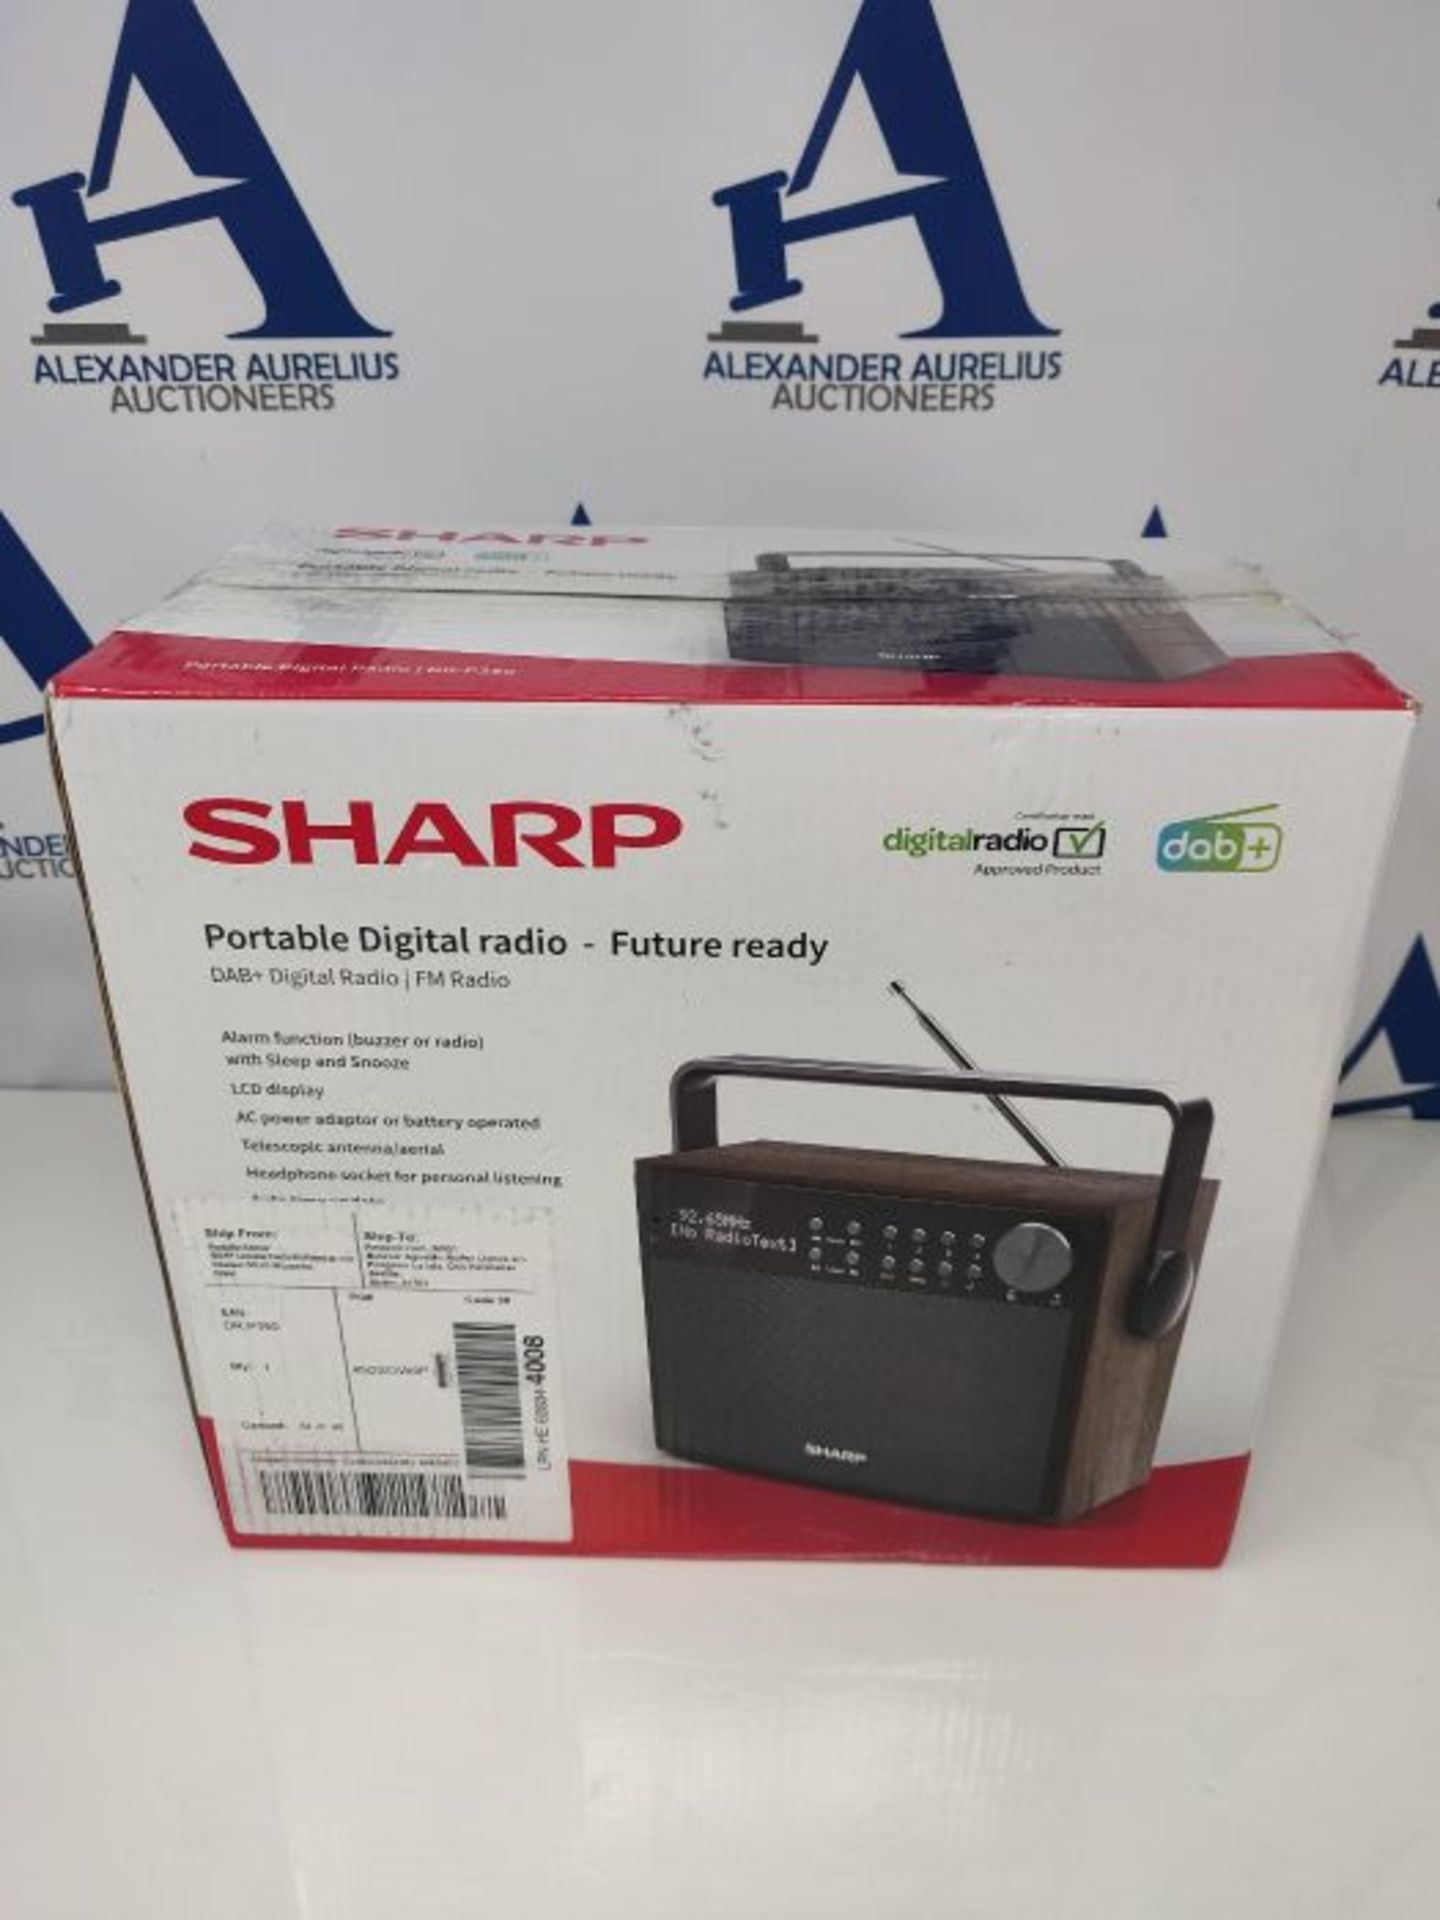 RRP £53.00 SHARP DR-P350 DAB+ Digital Radio, DAB/DAB +/FM mit RDS-Lauftext, Alarm-/Schlaf und Sno - Image 2 of 3